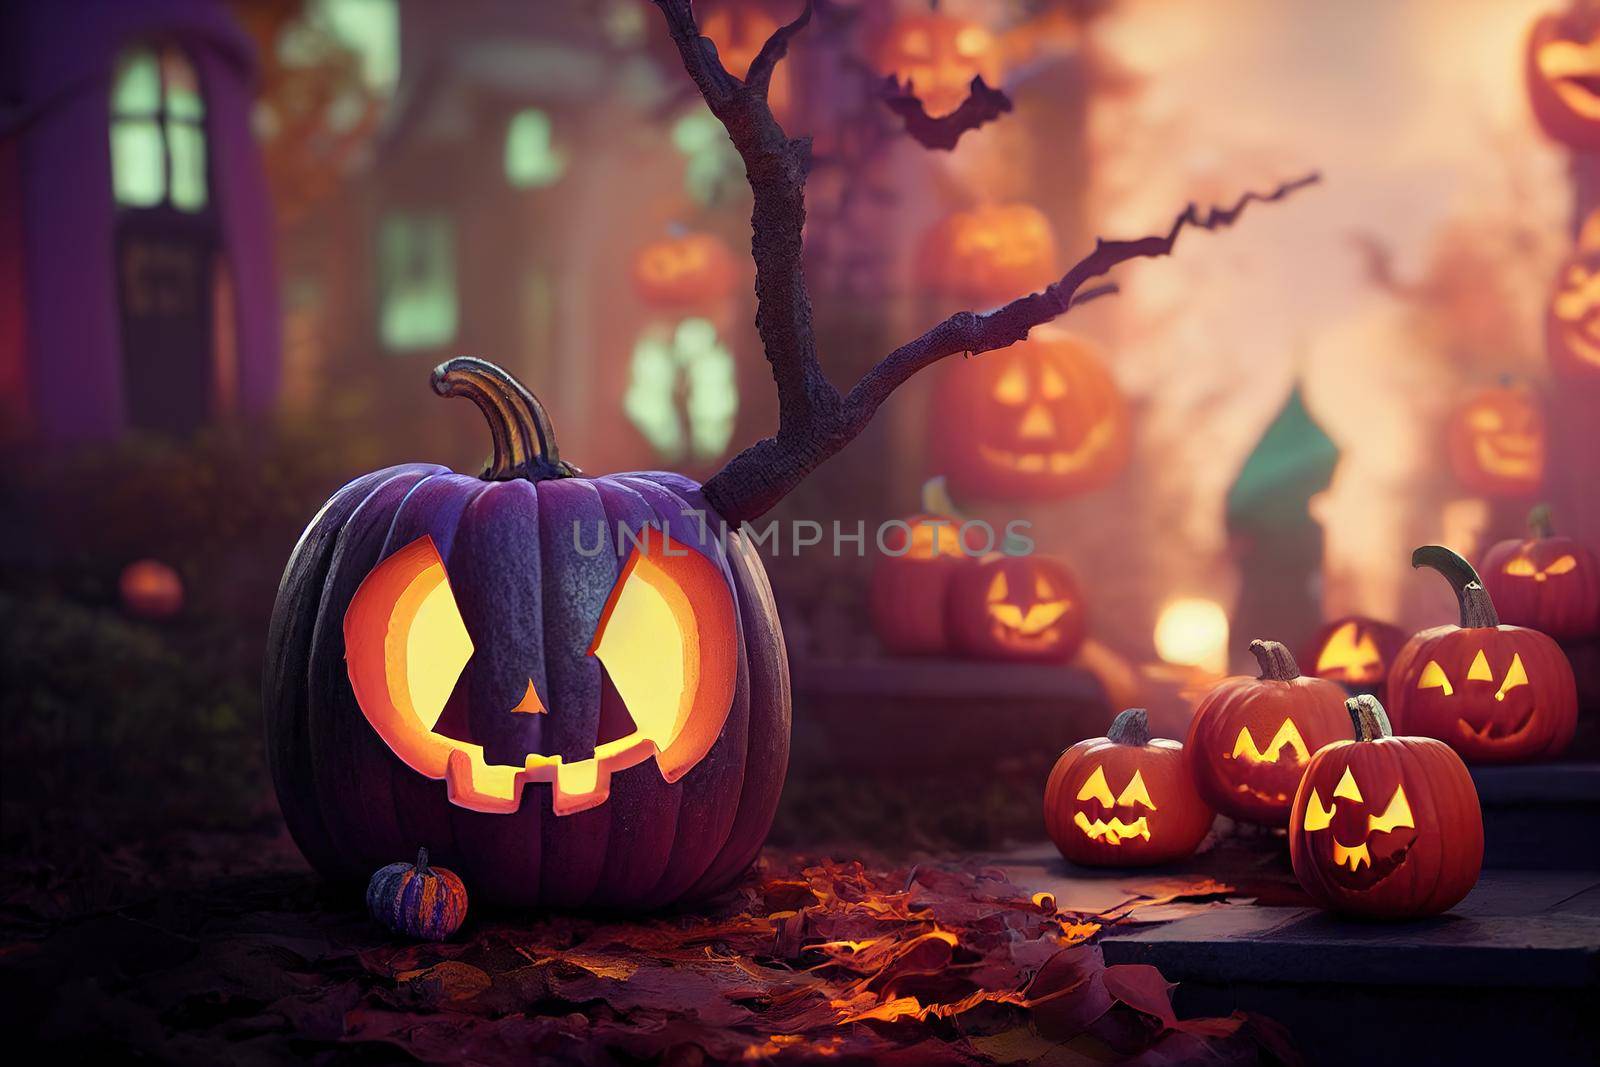 Spooky Halloween Pumpkin with another little pumpkins. High quality 3d illustration